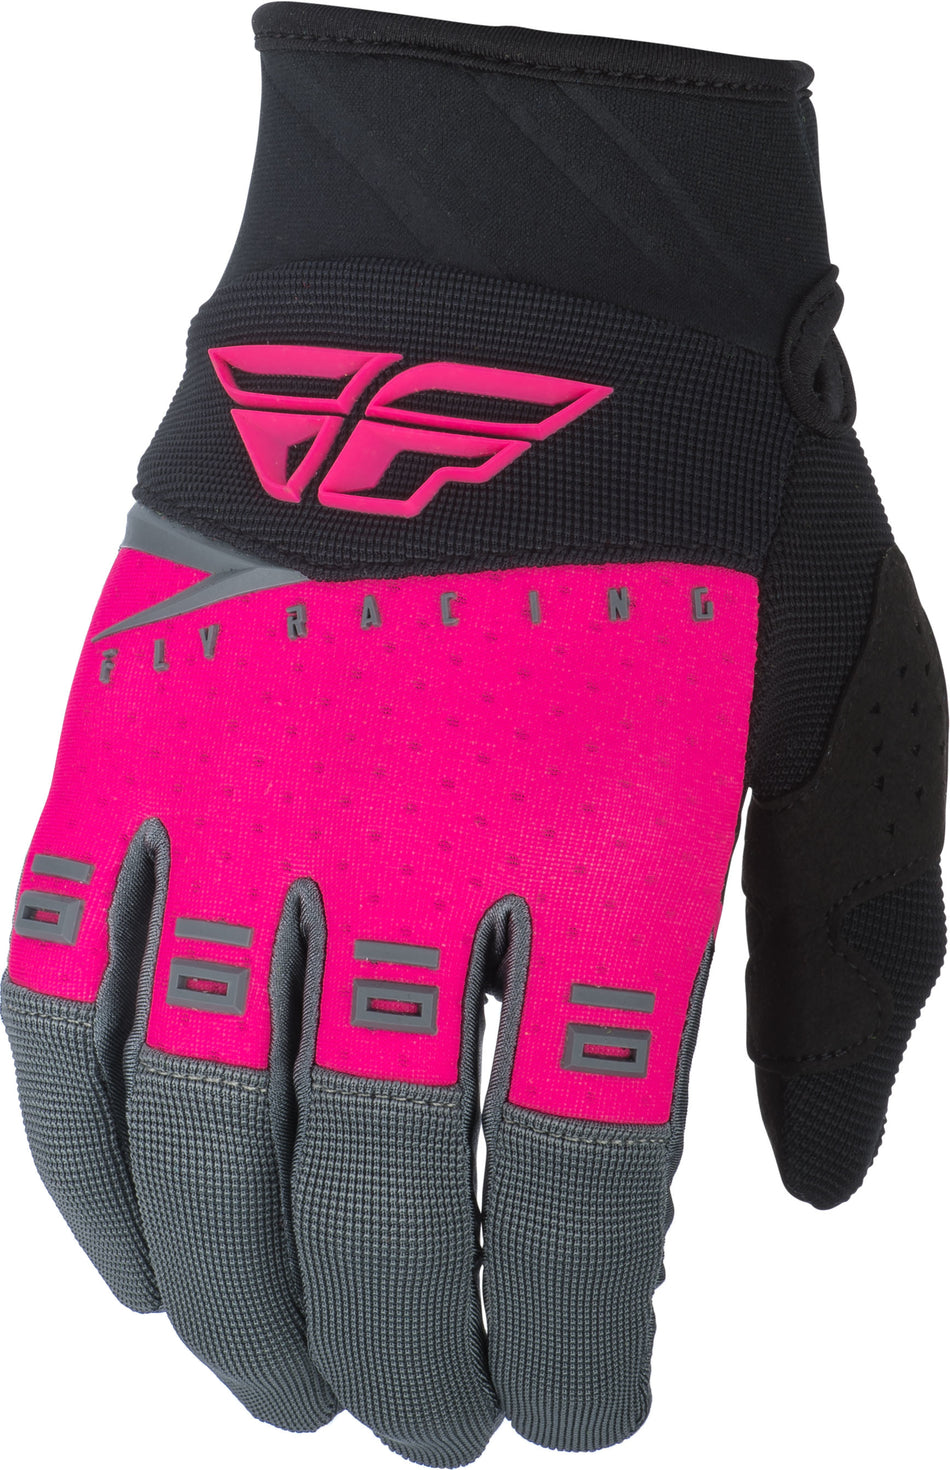 FLY RACING F-16 Gloves Neon Pink/Black/Grey Sz 09 372-91809